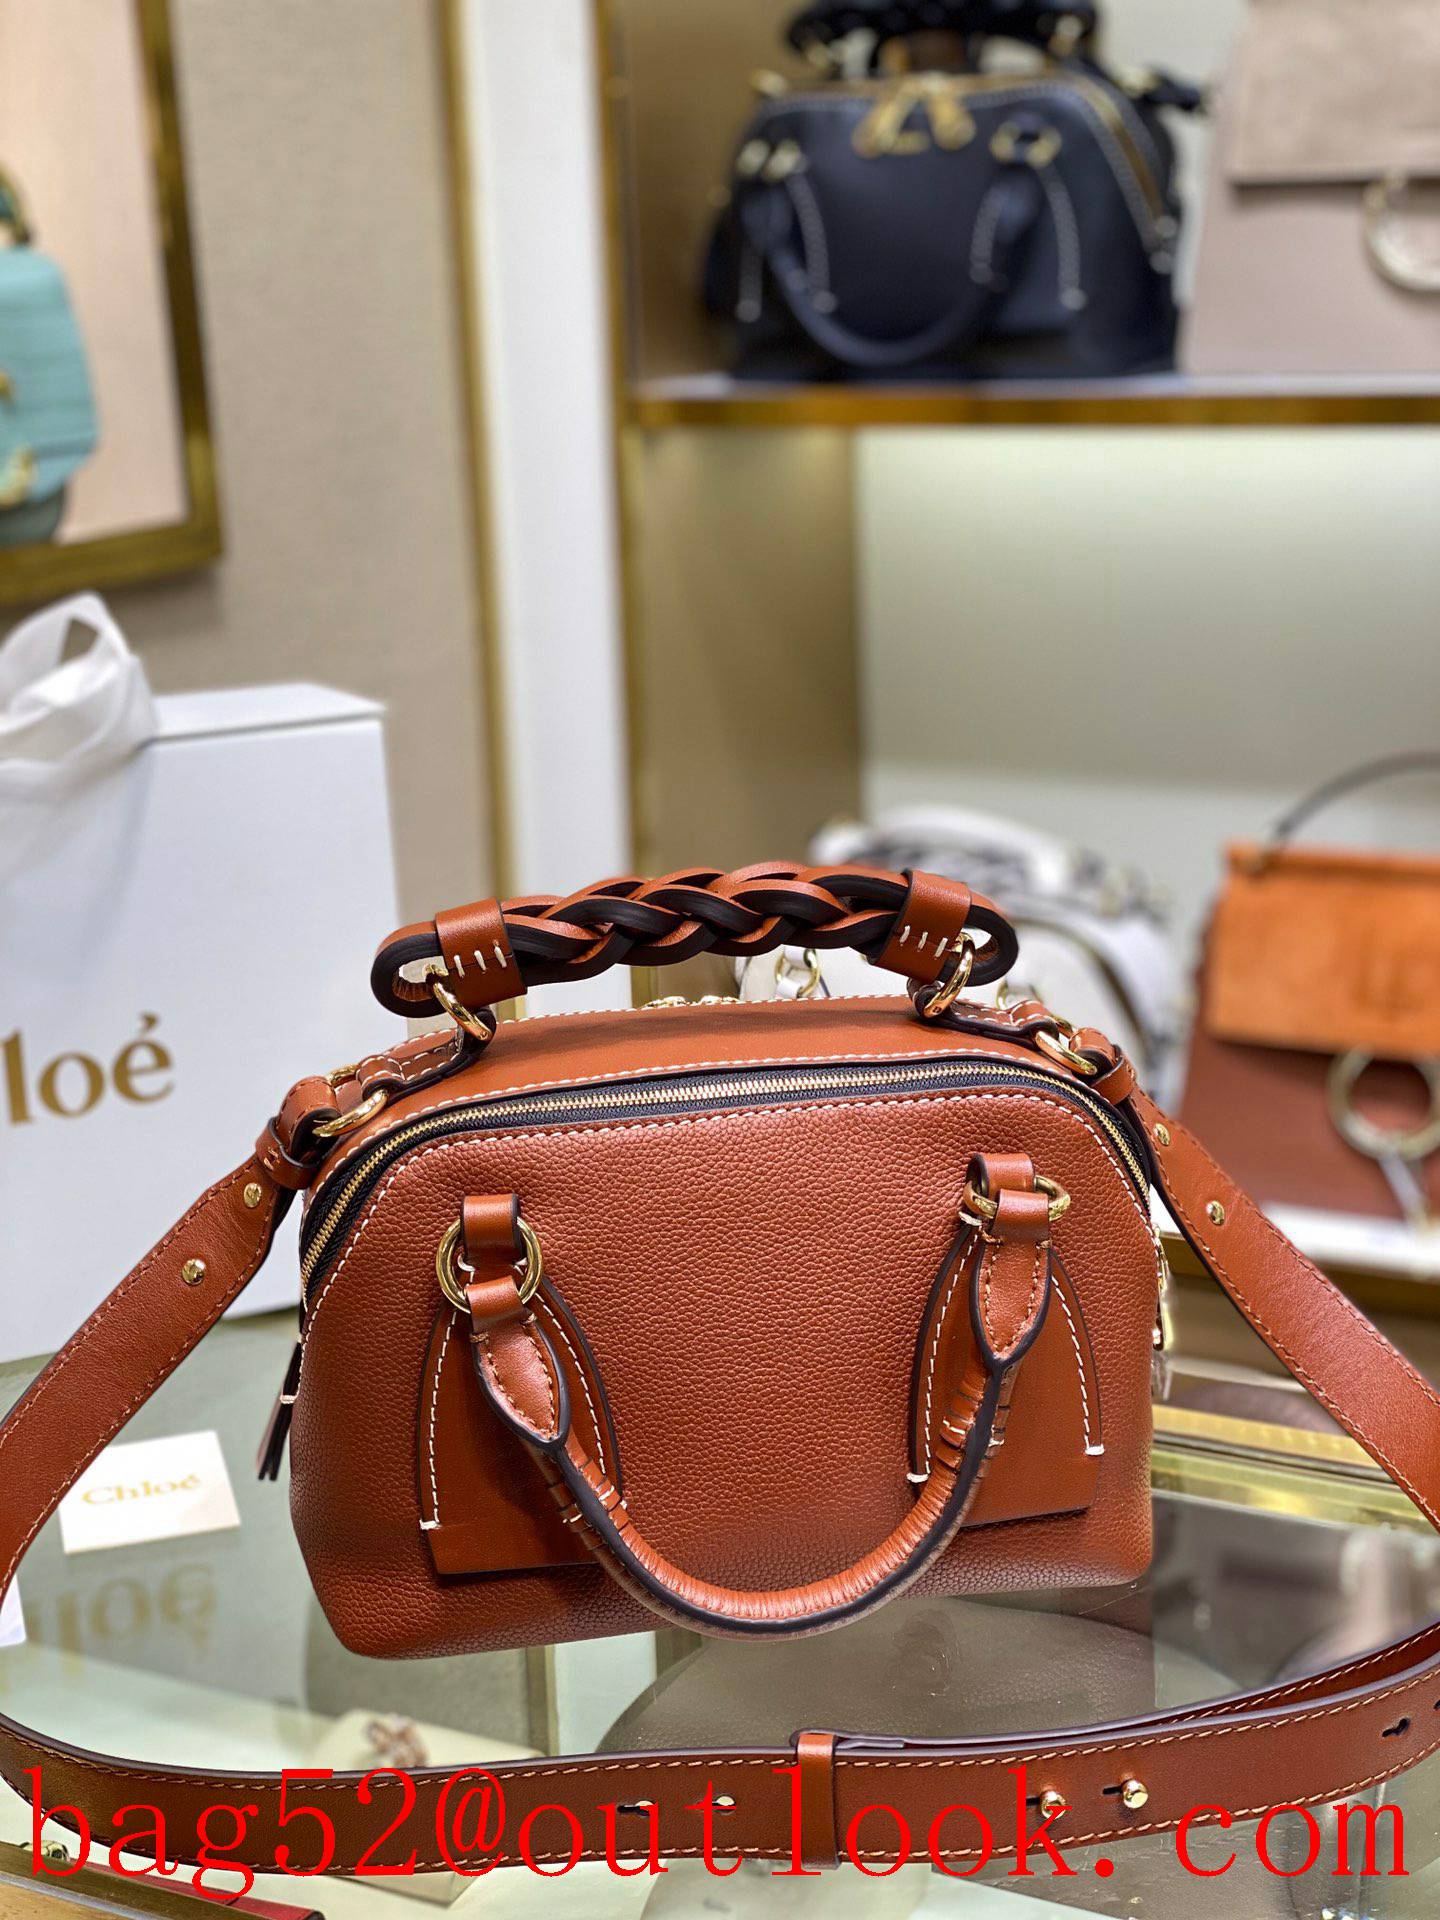 Chole darkbrown copper-gold-plated copper-gold-plated double zipper design handbag